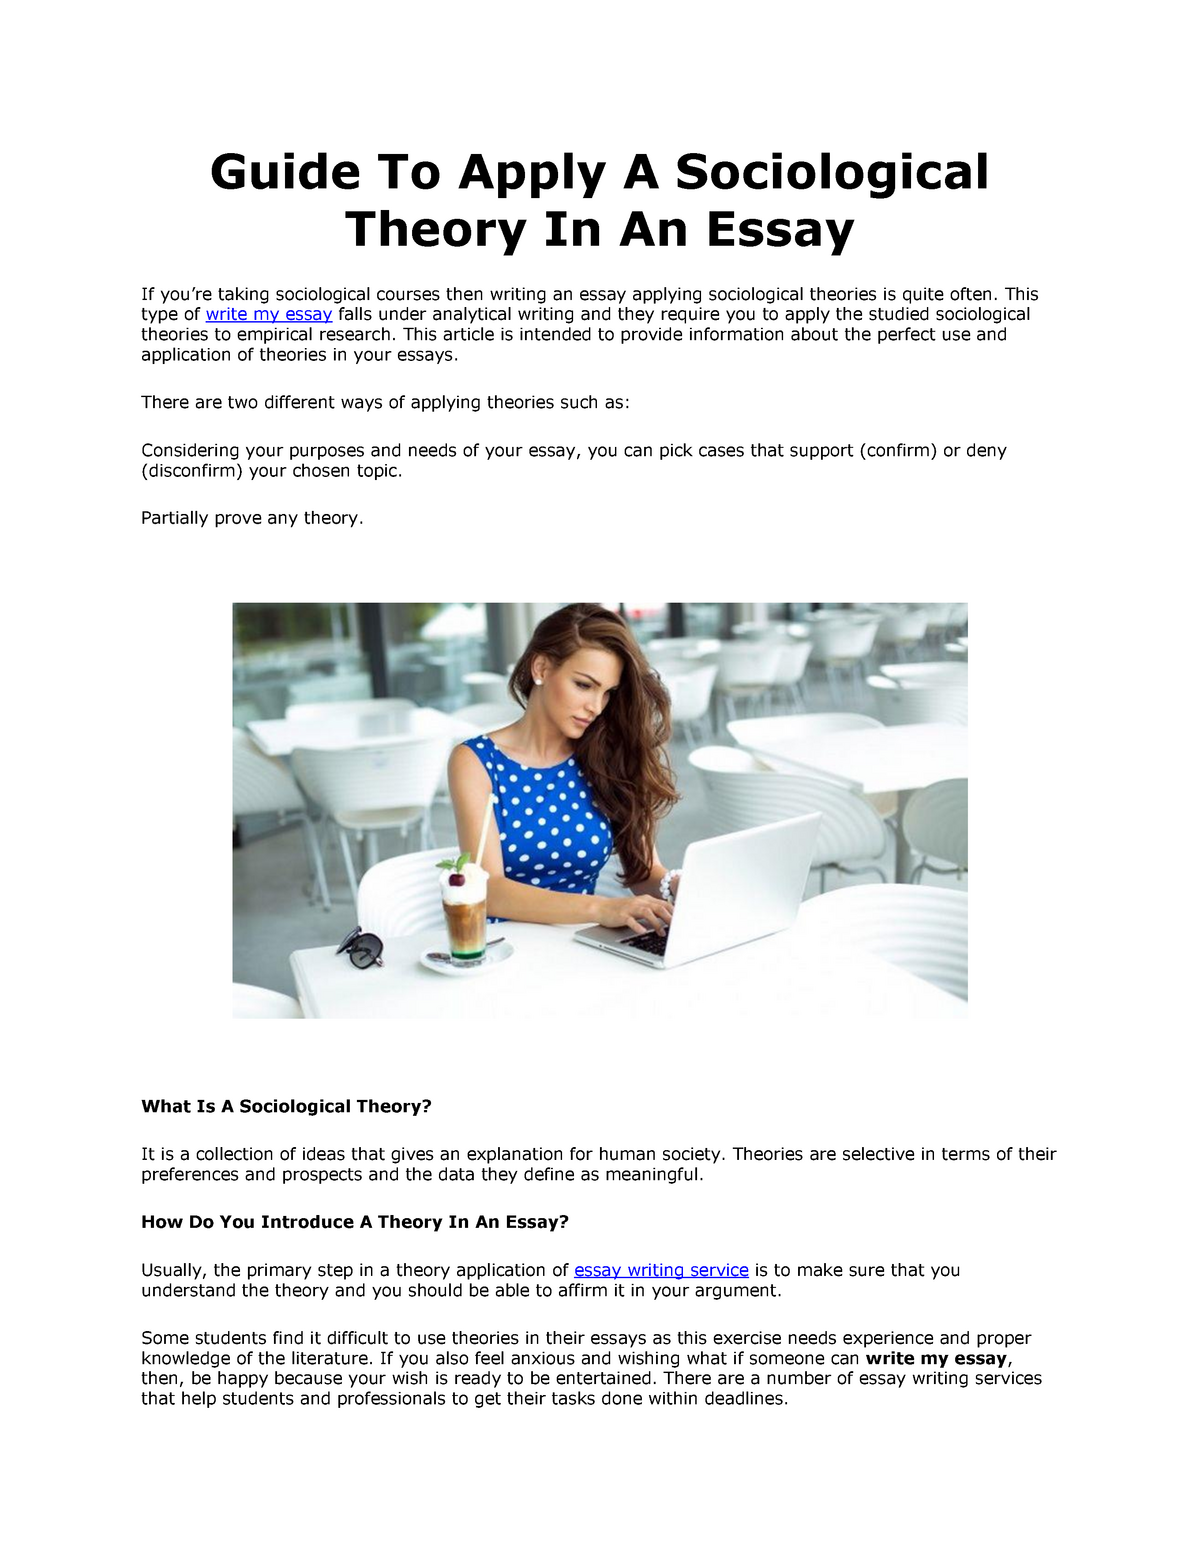 social work theory essay